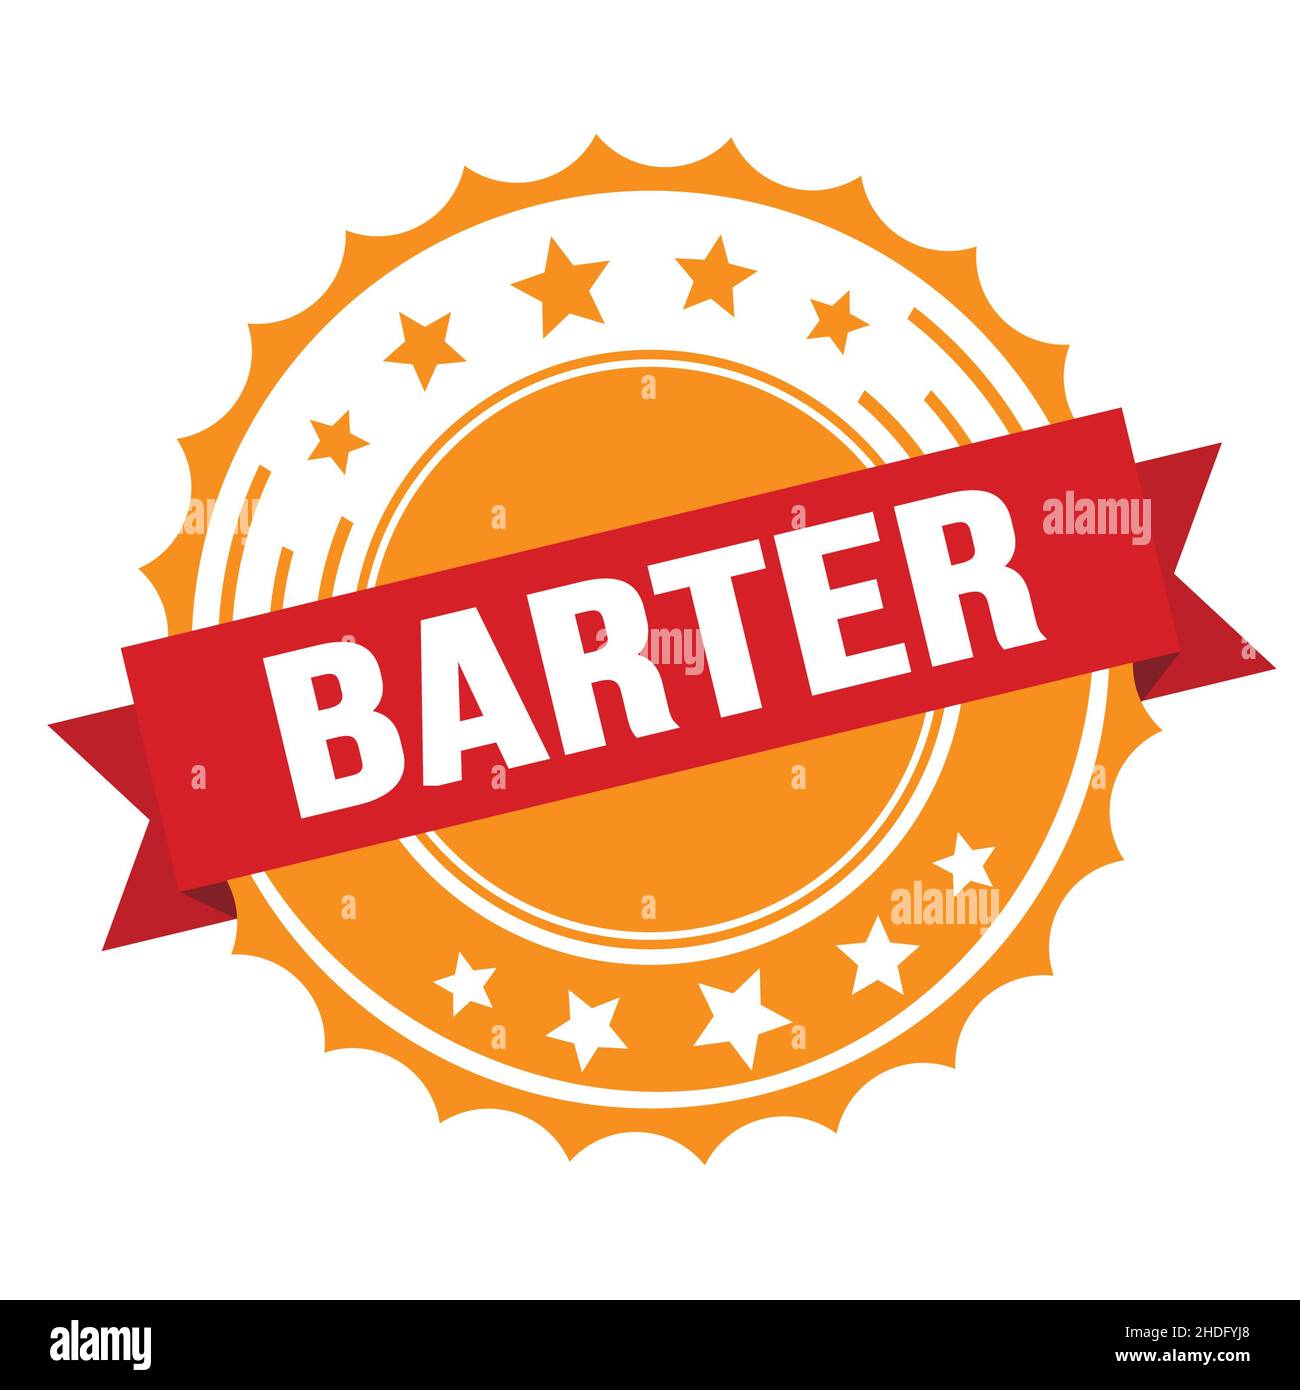 BARTER text on red orange ribbon badge stamp. Stock Photo